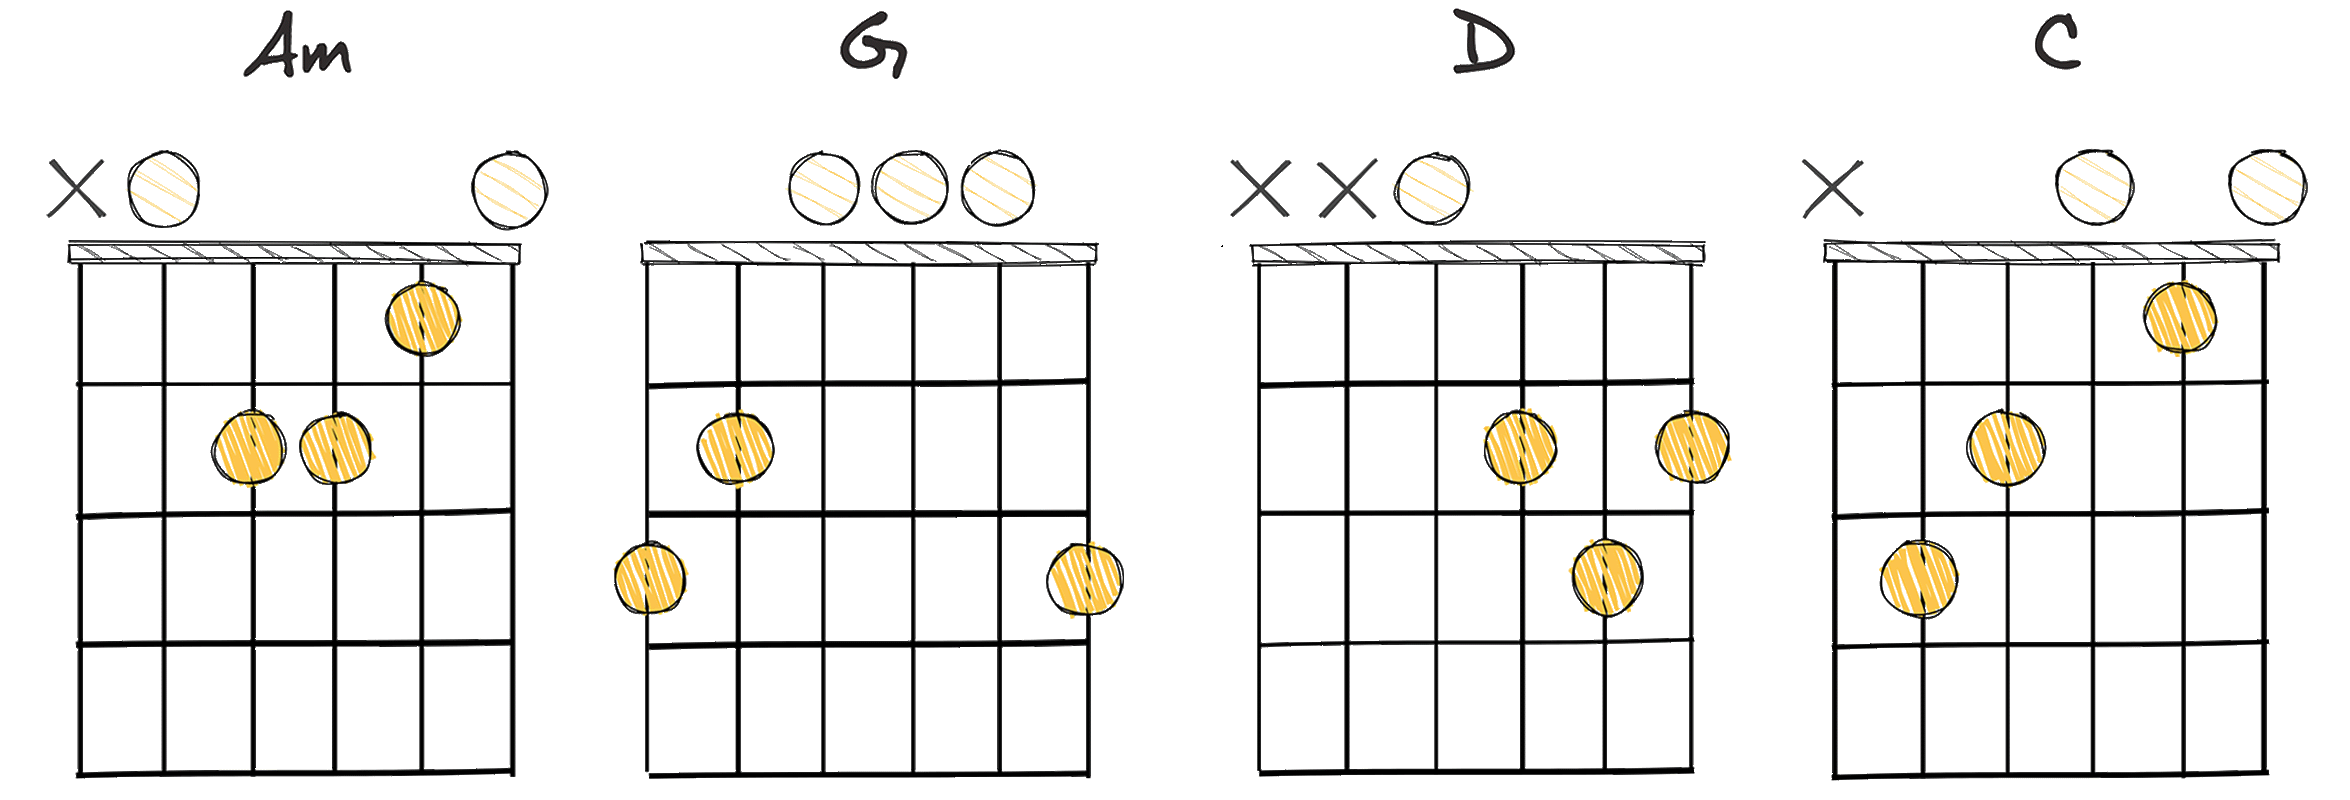 ii - I - V - IV (2-1-5-4) chords diagram